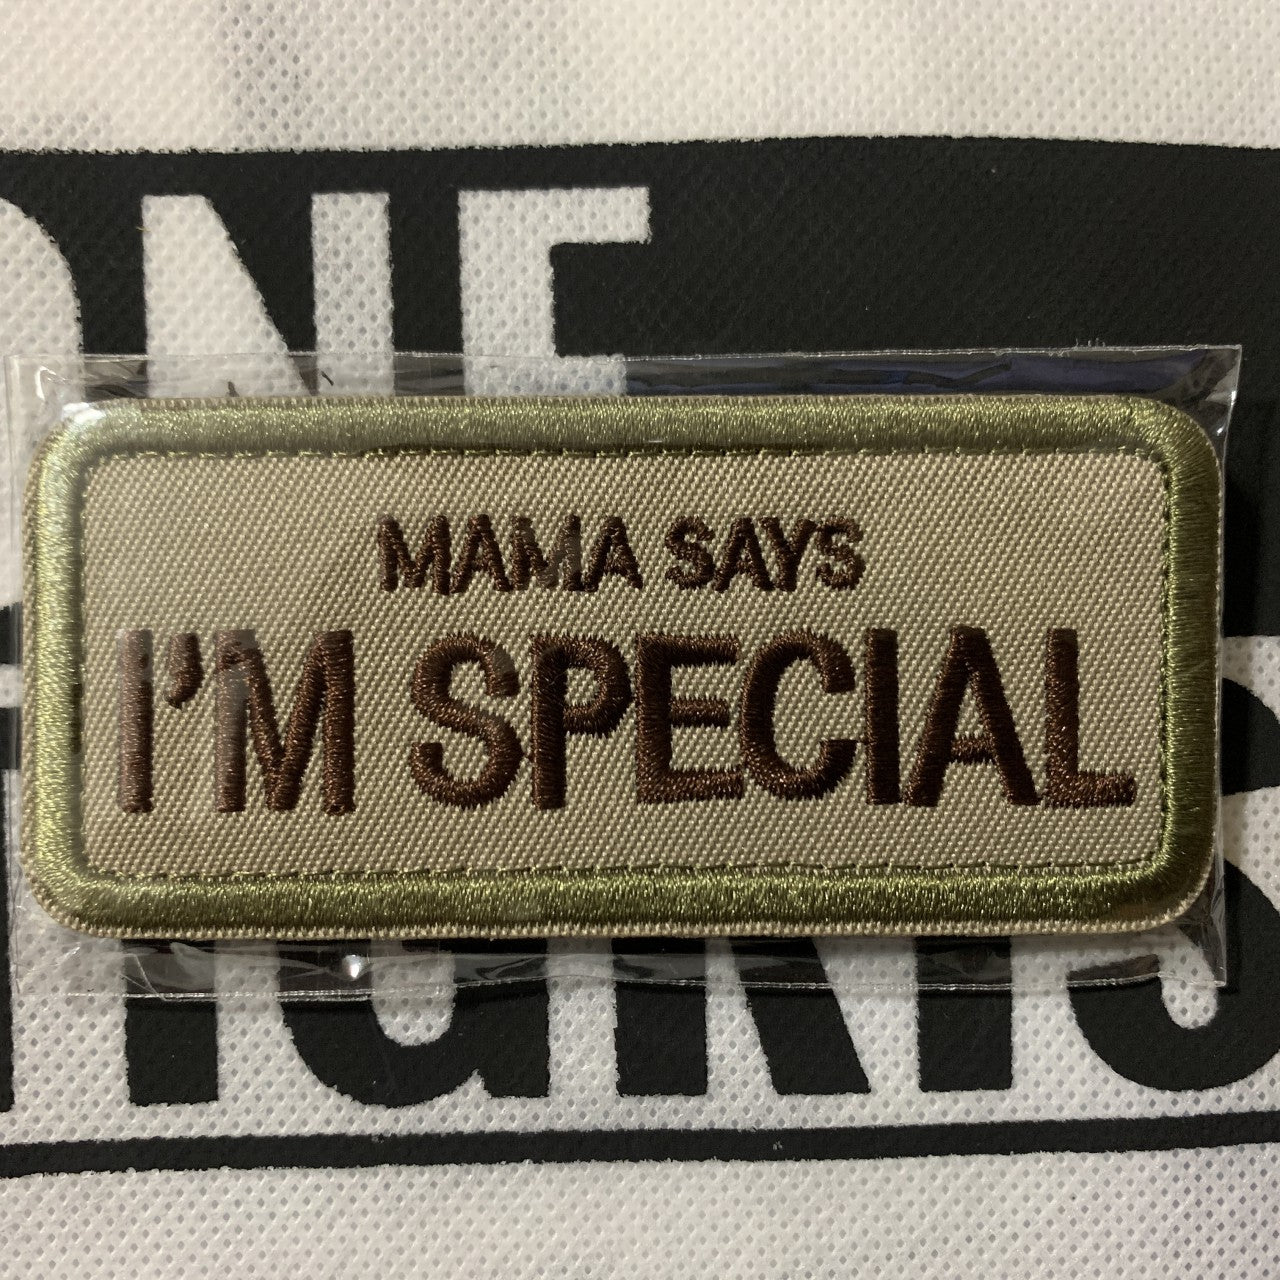 ONETIGRIS - "MAMA SAYS I''M SPECIAL" 魔術貼